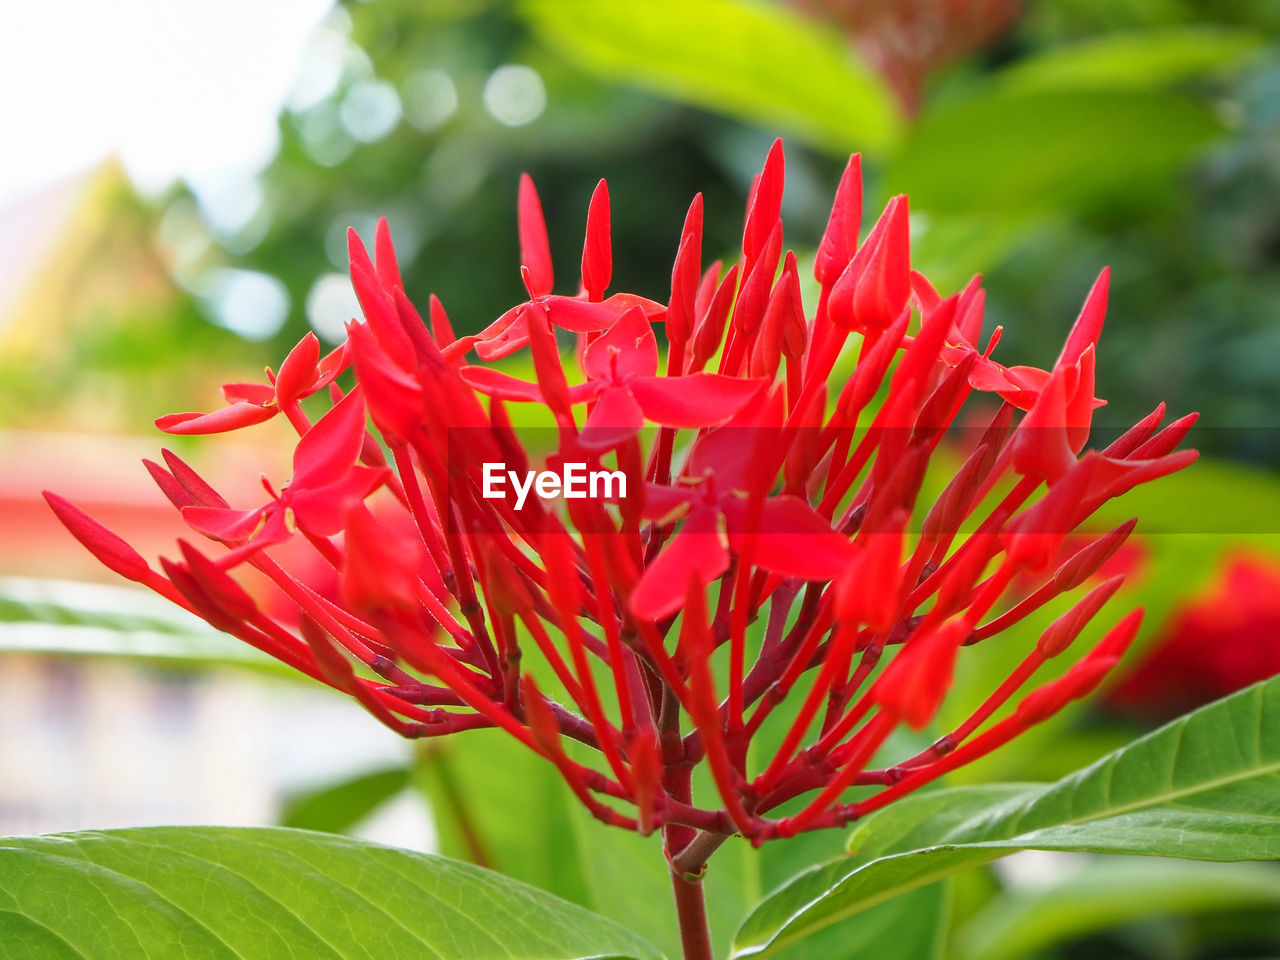 Beautiful red rubiaceae flower, ixora, with blurred green background.